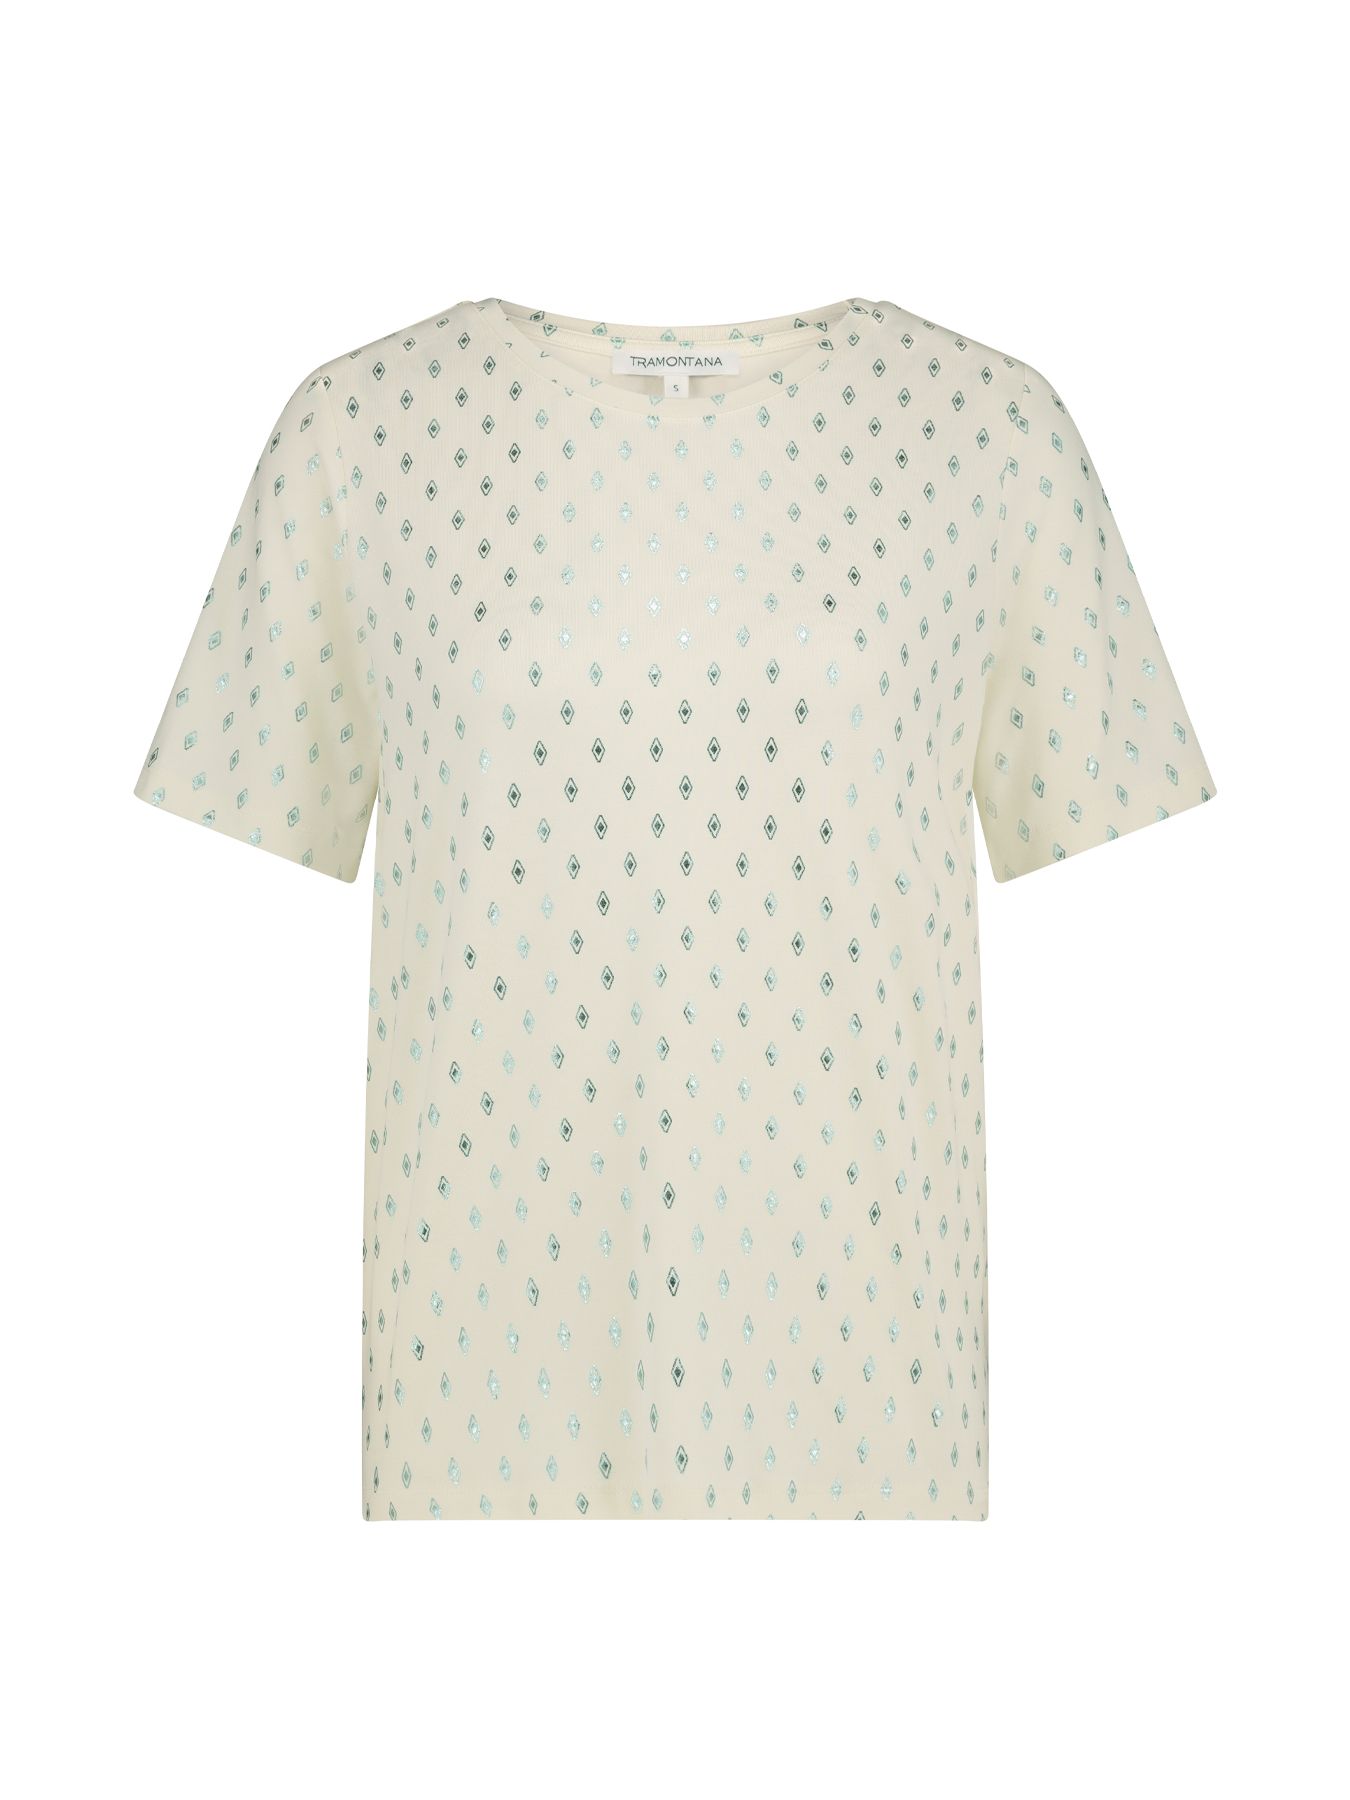 Tramontana T-Shirt Geometric Foil Light Green 006040 00104374-EKA26012900000010